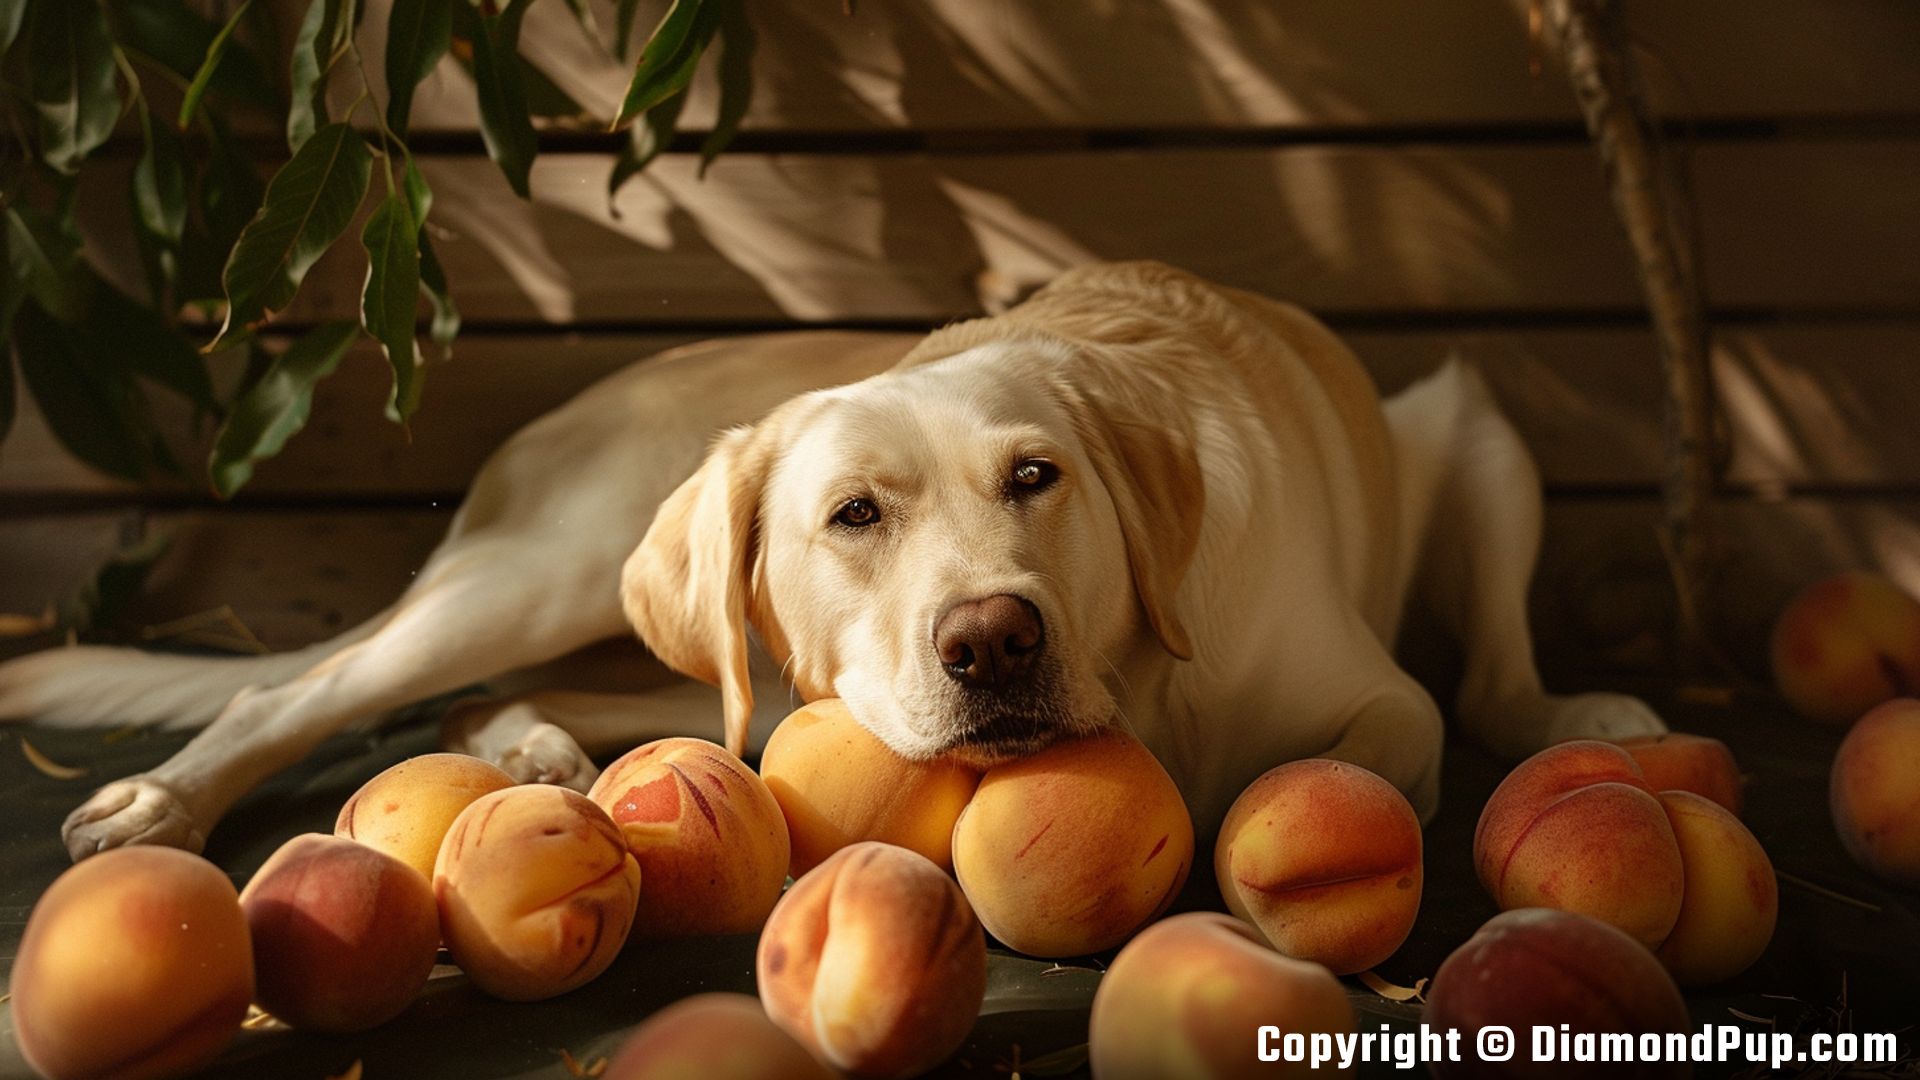 Photograph of a Cute Labrador Snacking on Peaches